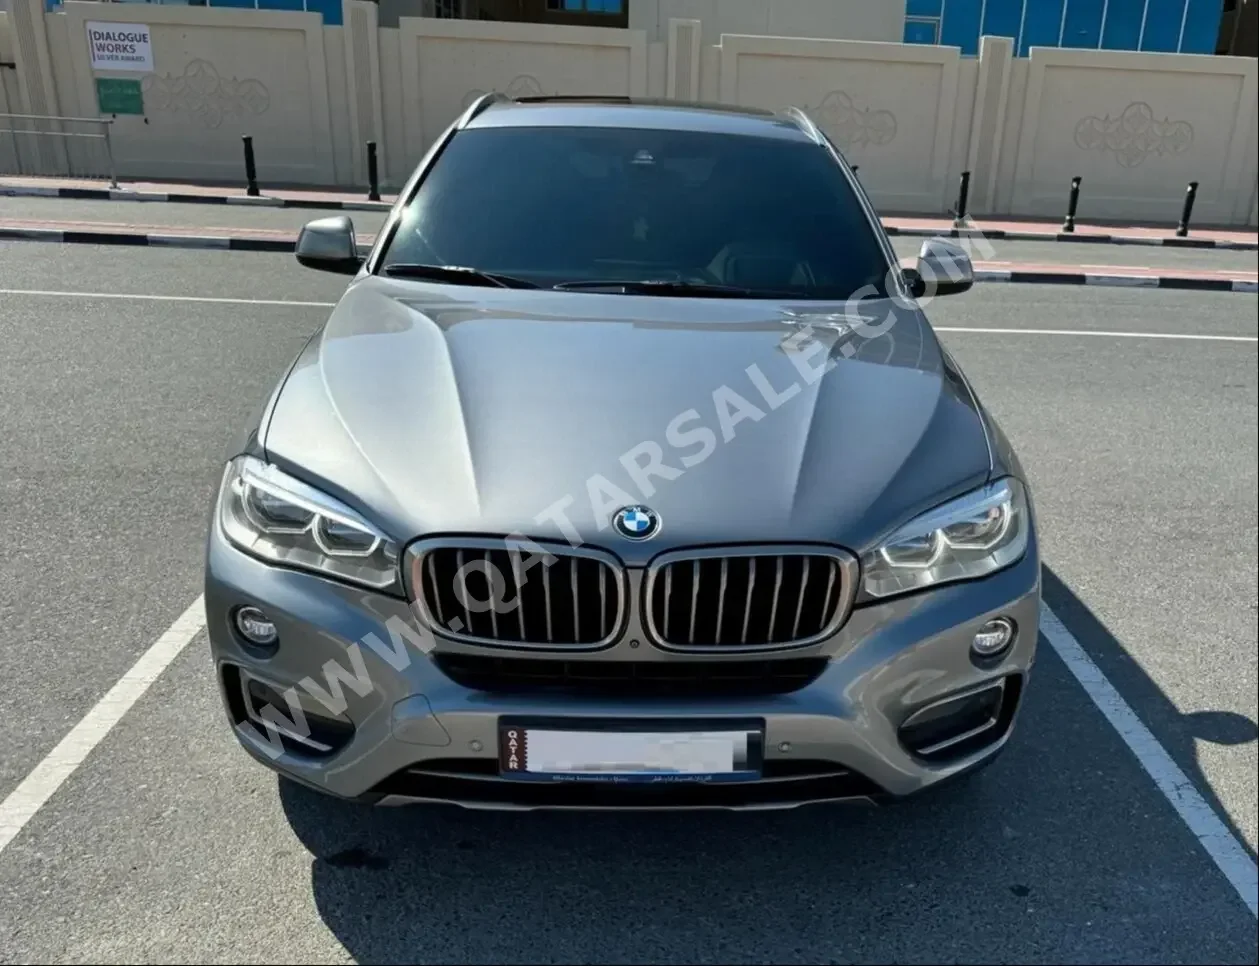 BMW  X-Series  X6  2016  Automatic  90,100 Km  8 Cylinder  Four Wheel Drive (4WD)  SUV  Silver